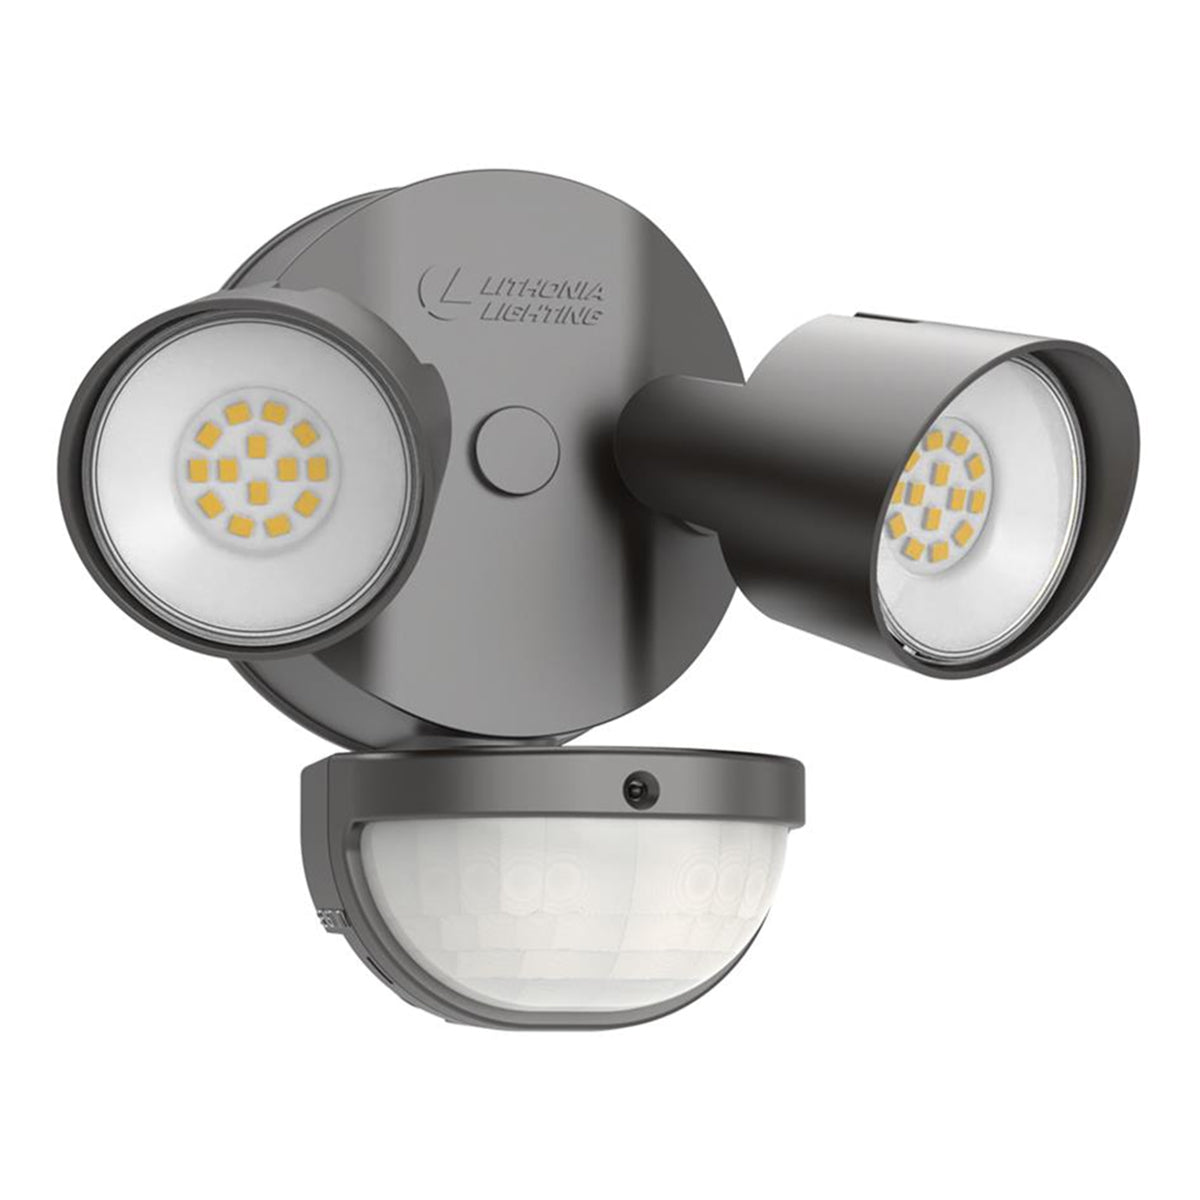 LED Security Flood Light With Motion Sensor, 2750 Lumens, 26 Watt, 4000K, Adjustable 2-Head, Bronze Finish